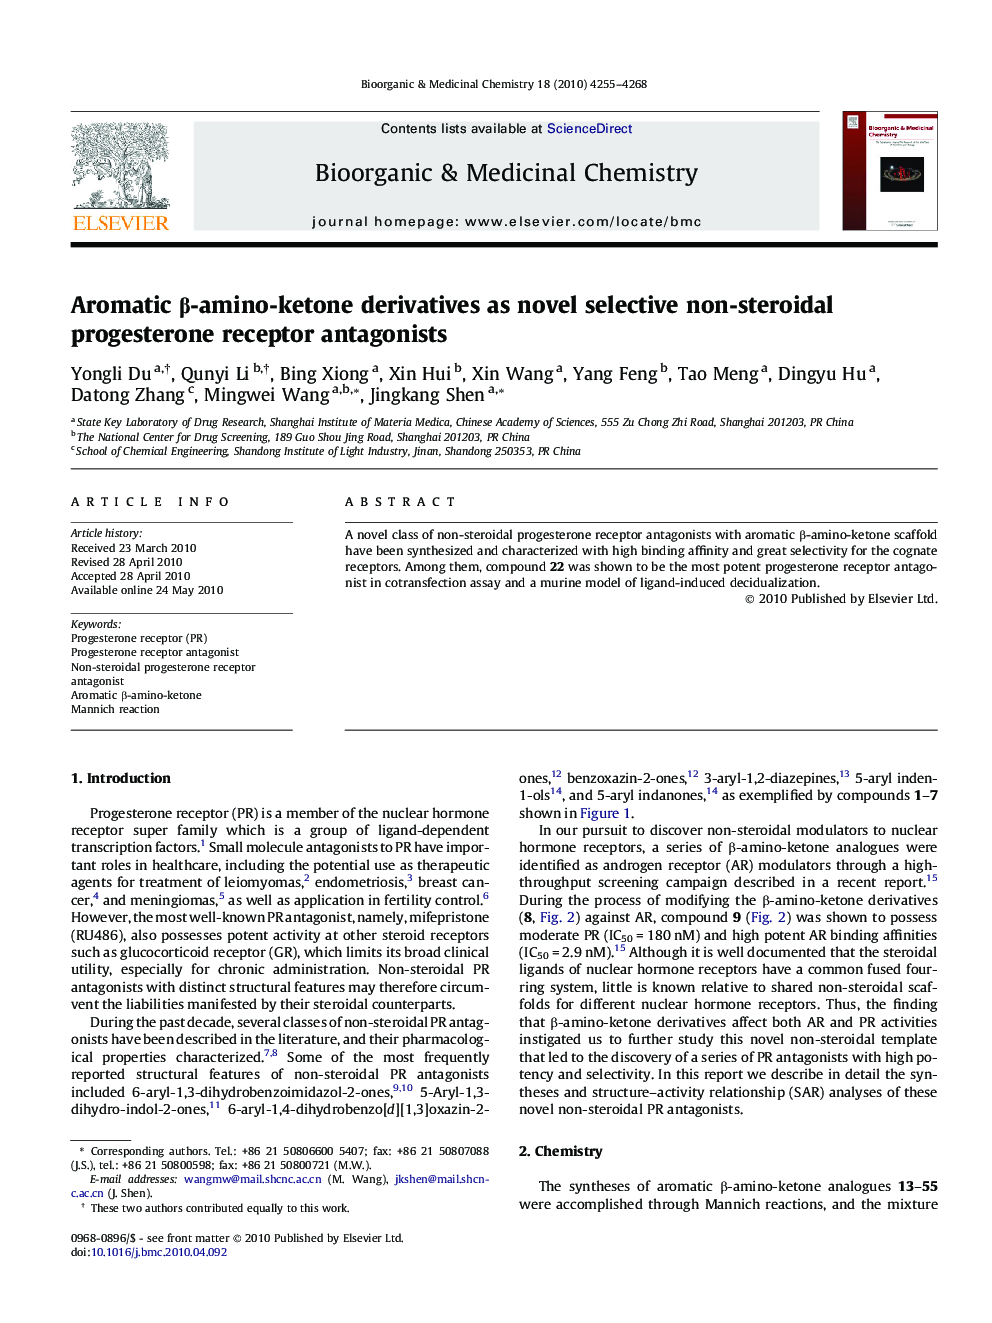 Aromatic β-amino-ketone derivatives as novel selective non-steroidal progesterone receptor antagonists